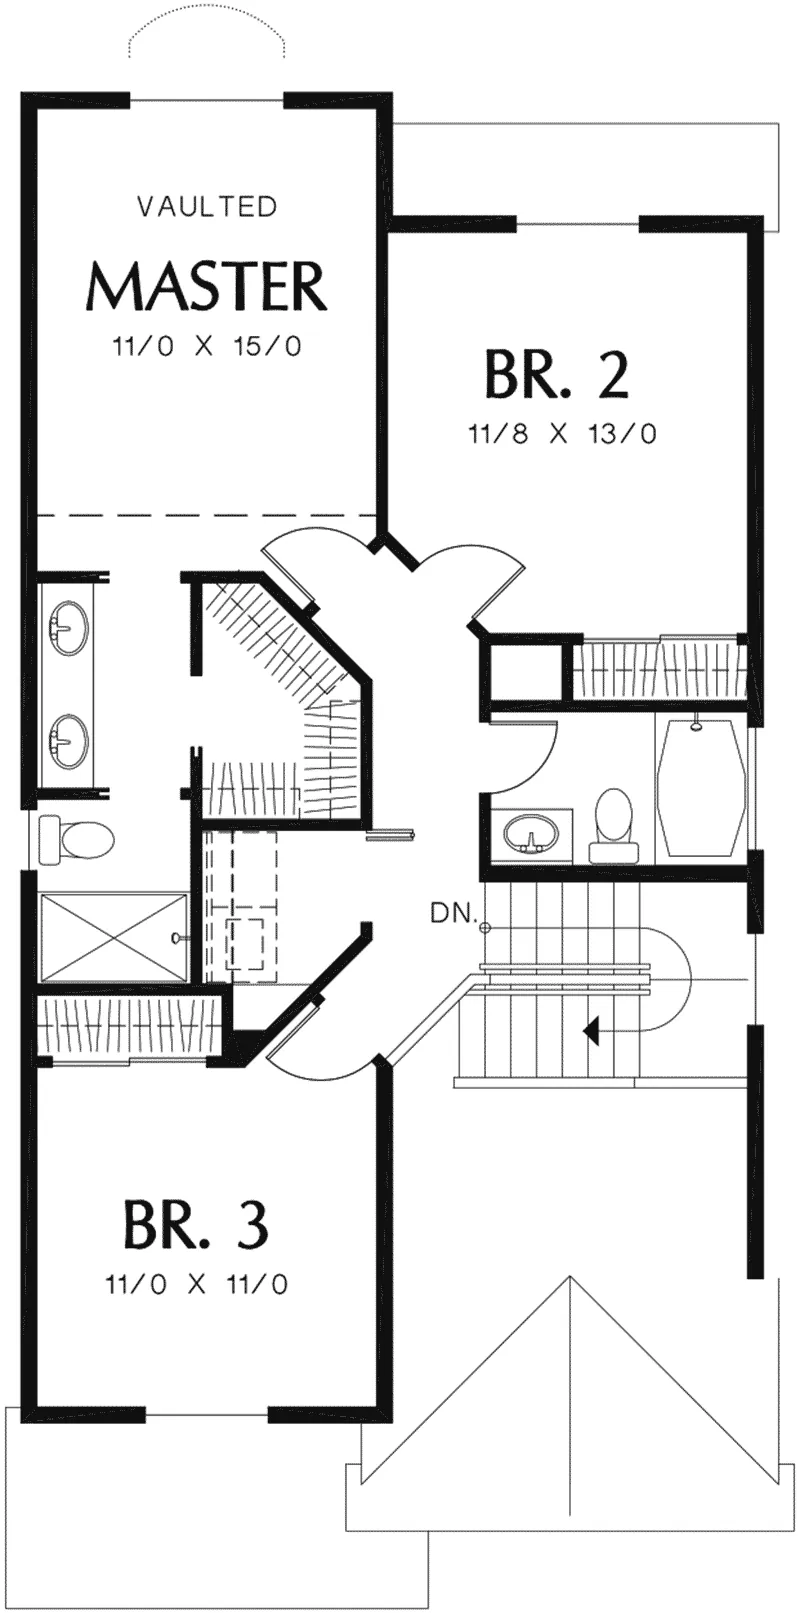 Shingle House Plan Second Floor - Larkin Lane Craftsman Home 011D-0367 - Shop House Plans and More